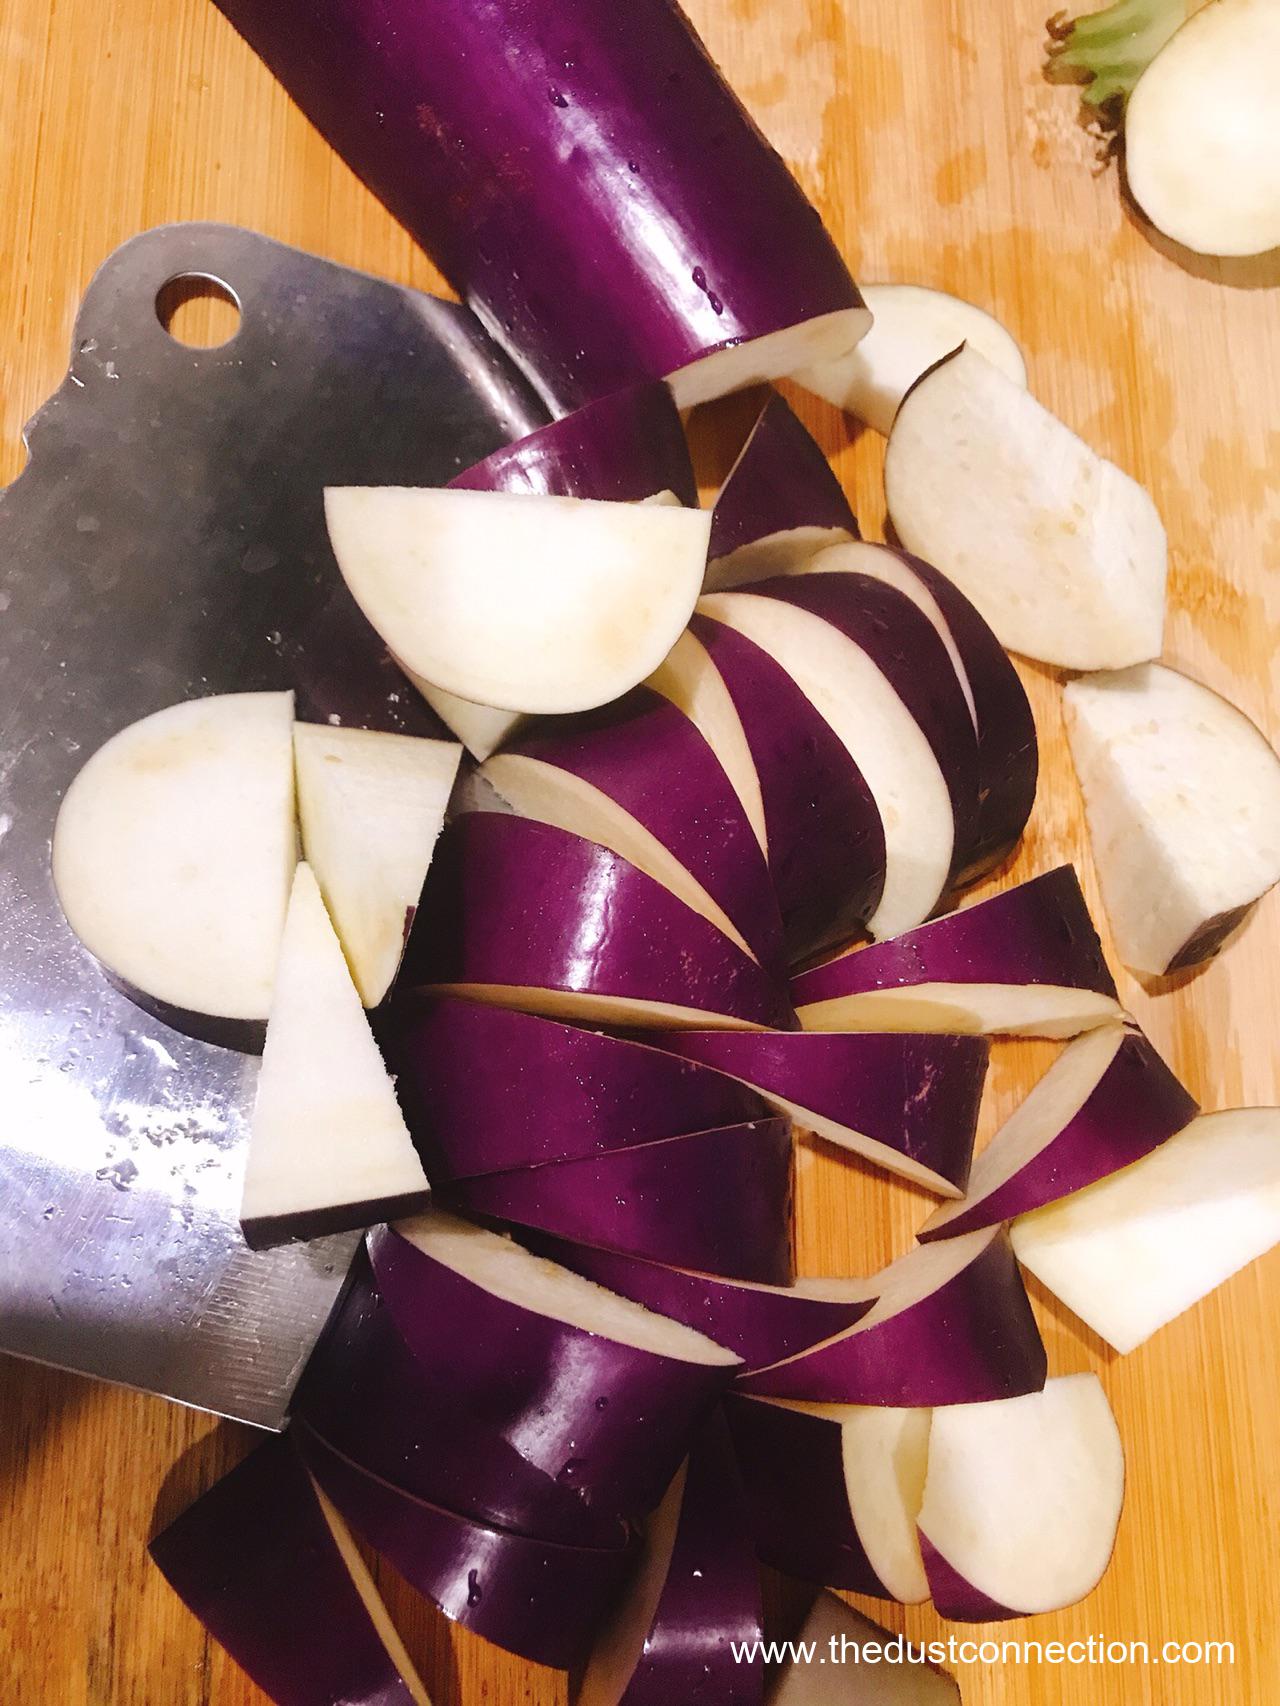 cut the eggplants into bite-sized pieces